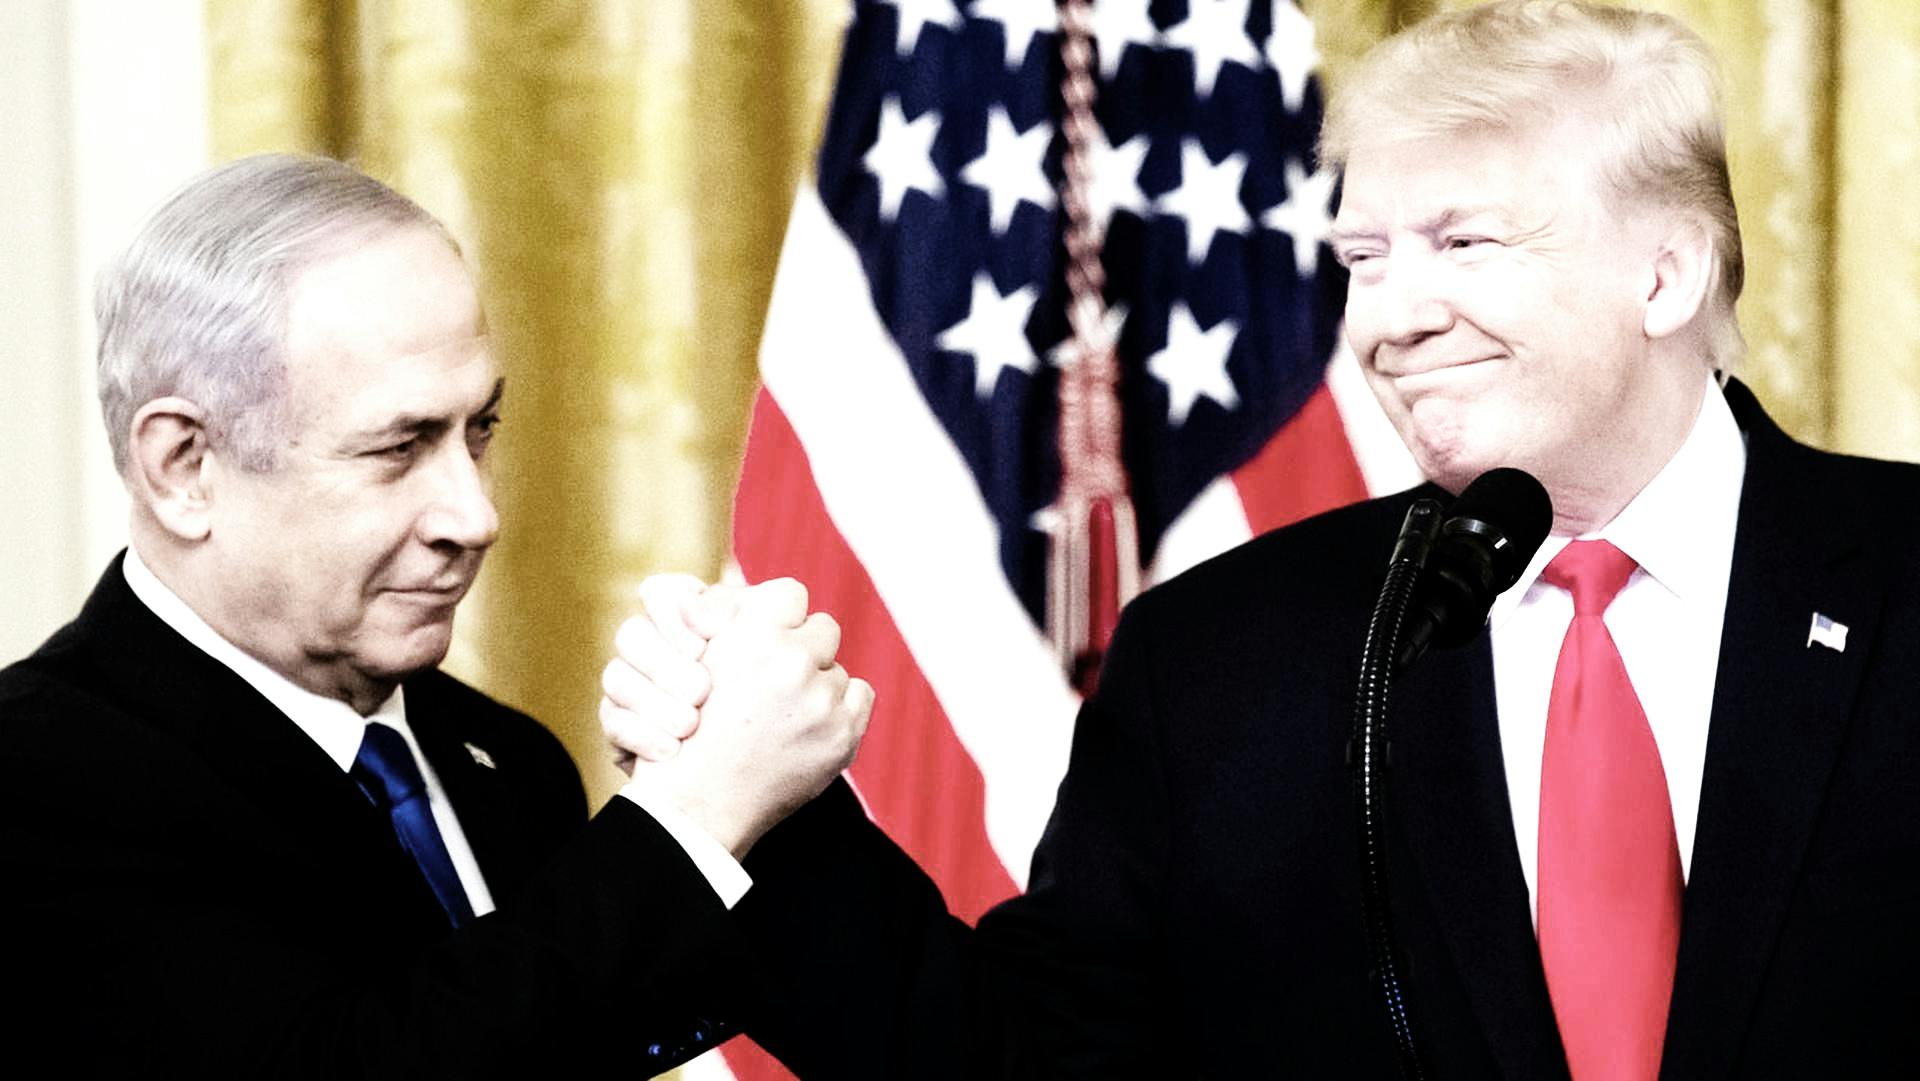 Trump's "deal of the century" demands Palestinian surrender